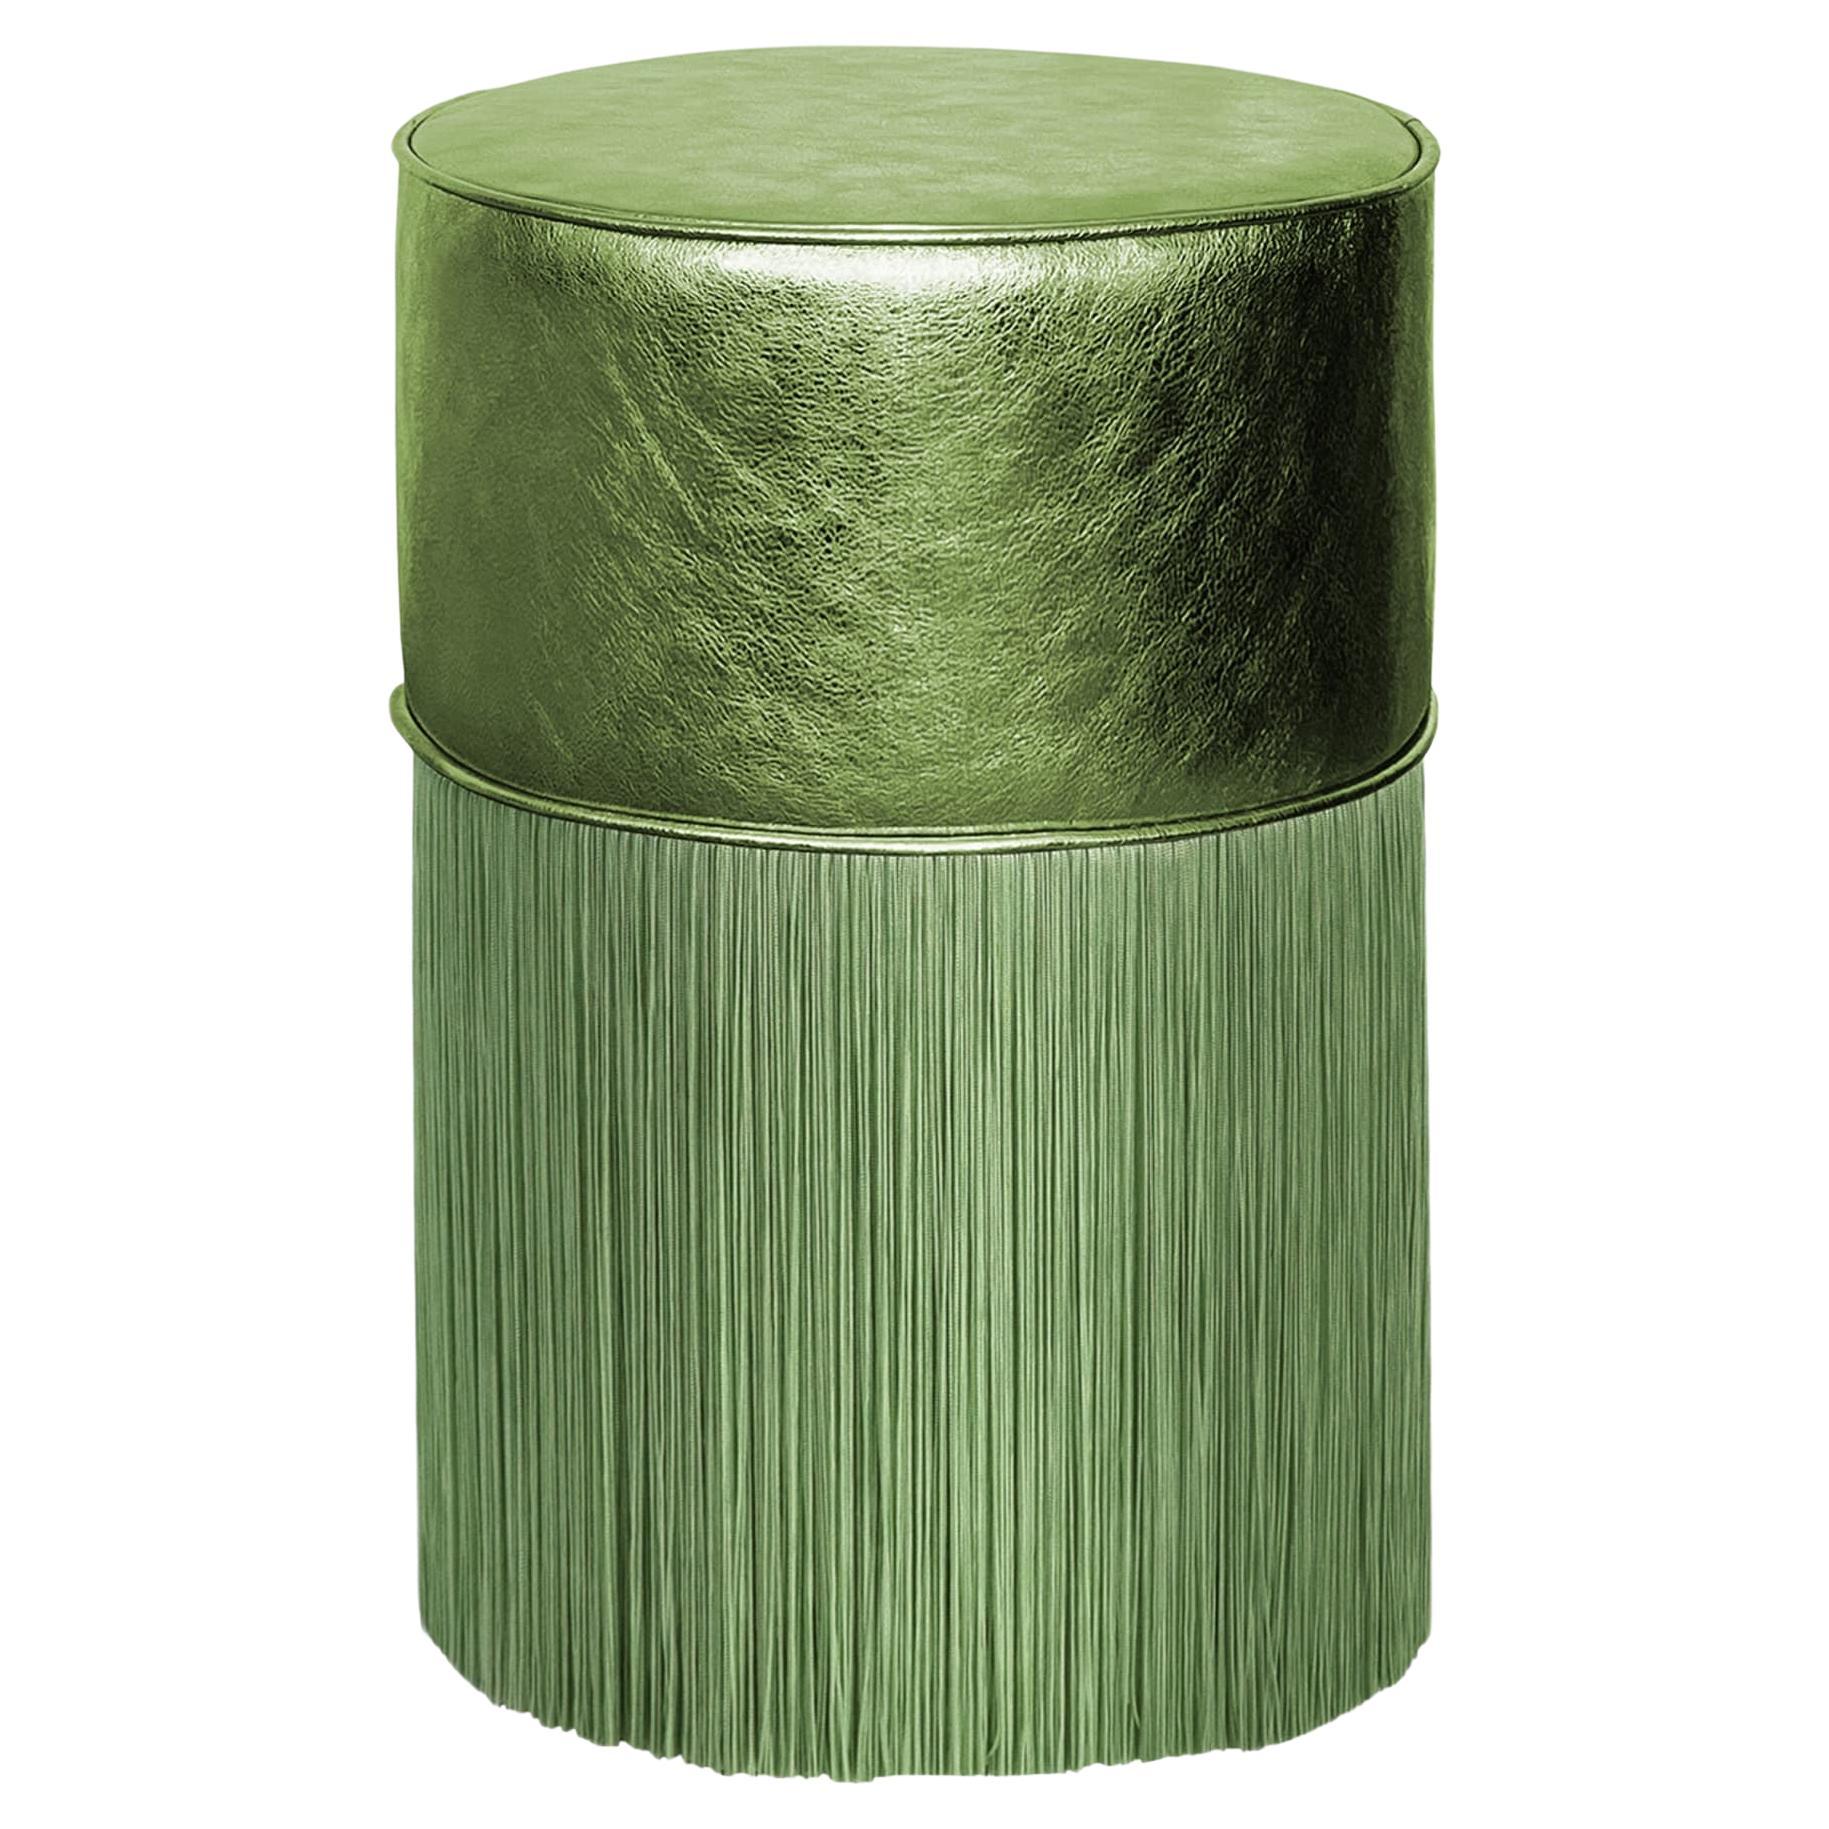 Gleaming Green Metallic Leather Pouf by Lorenza Bozzoli